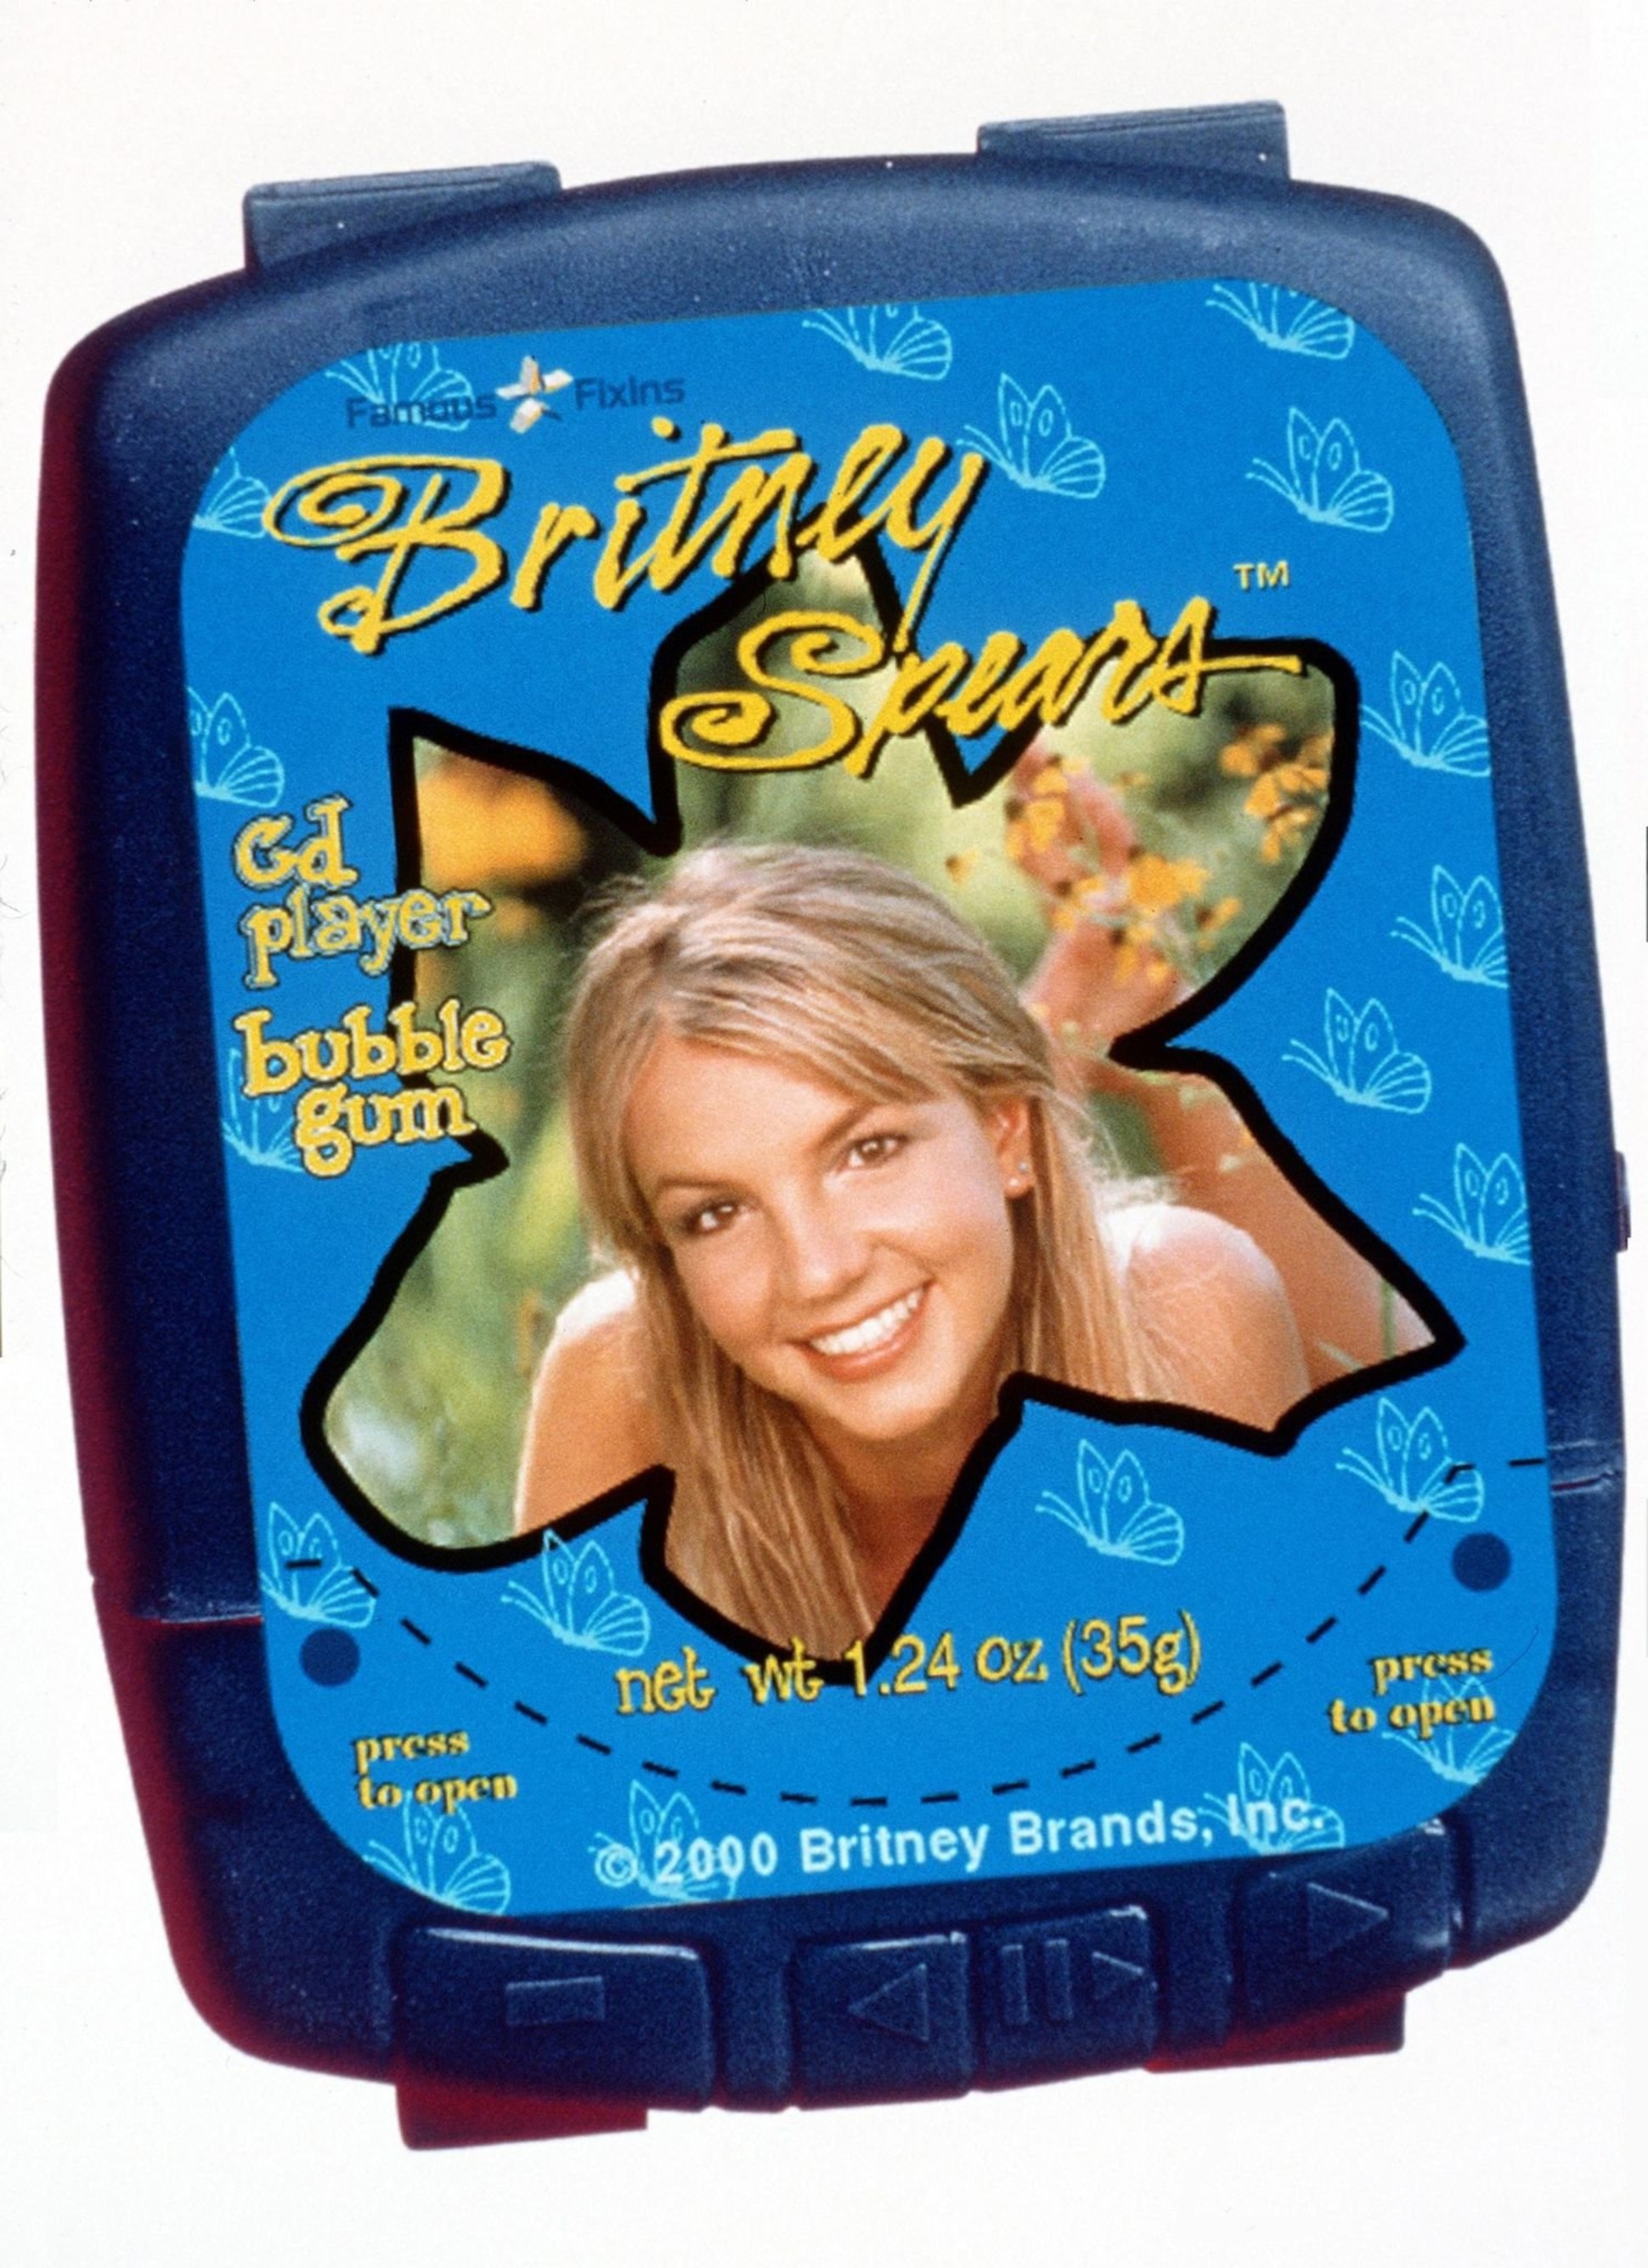 Britney Spears Cd Bubble Gum 2000 001 Britney Spears Img 0406